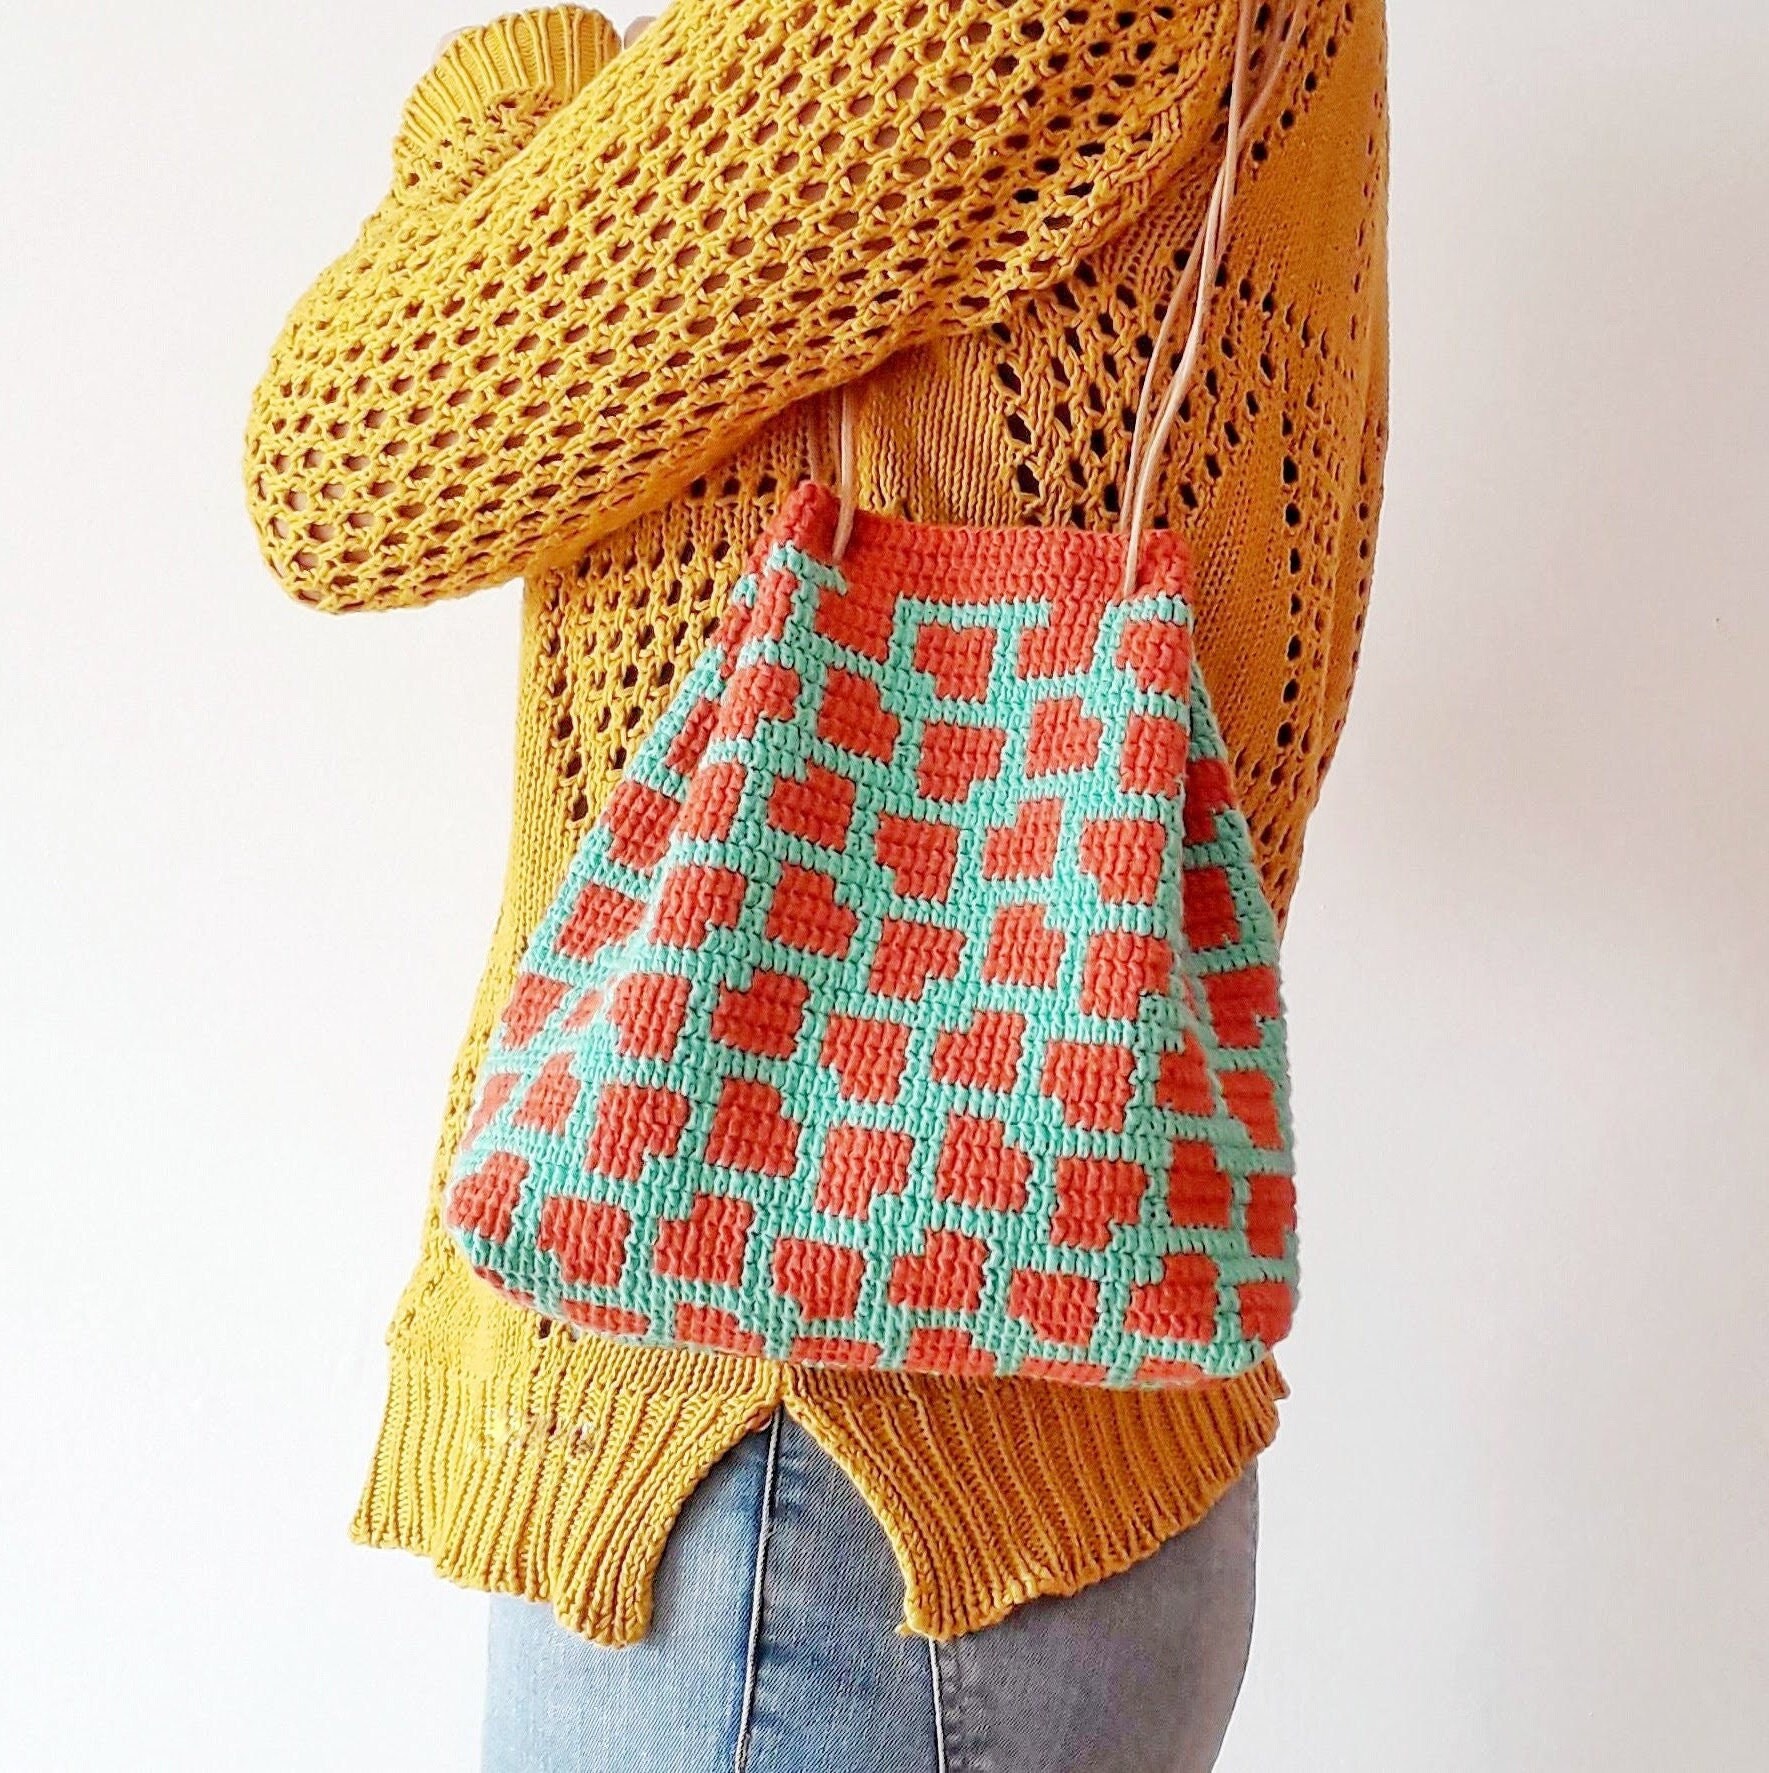 LLBC • Louis Vuitton inspired Crochet bag Tapestry Crochet